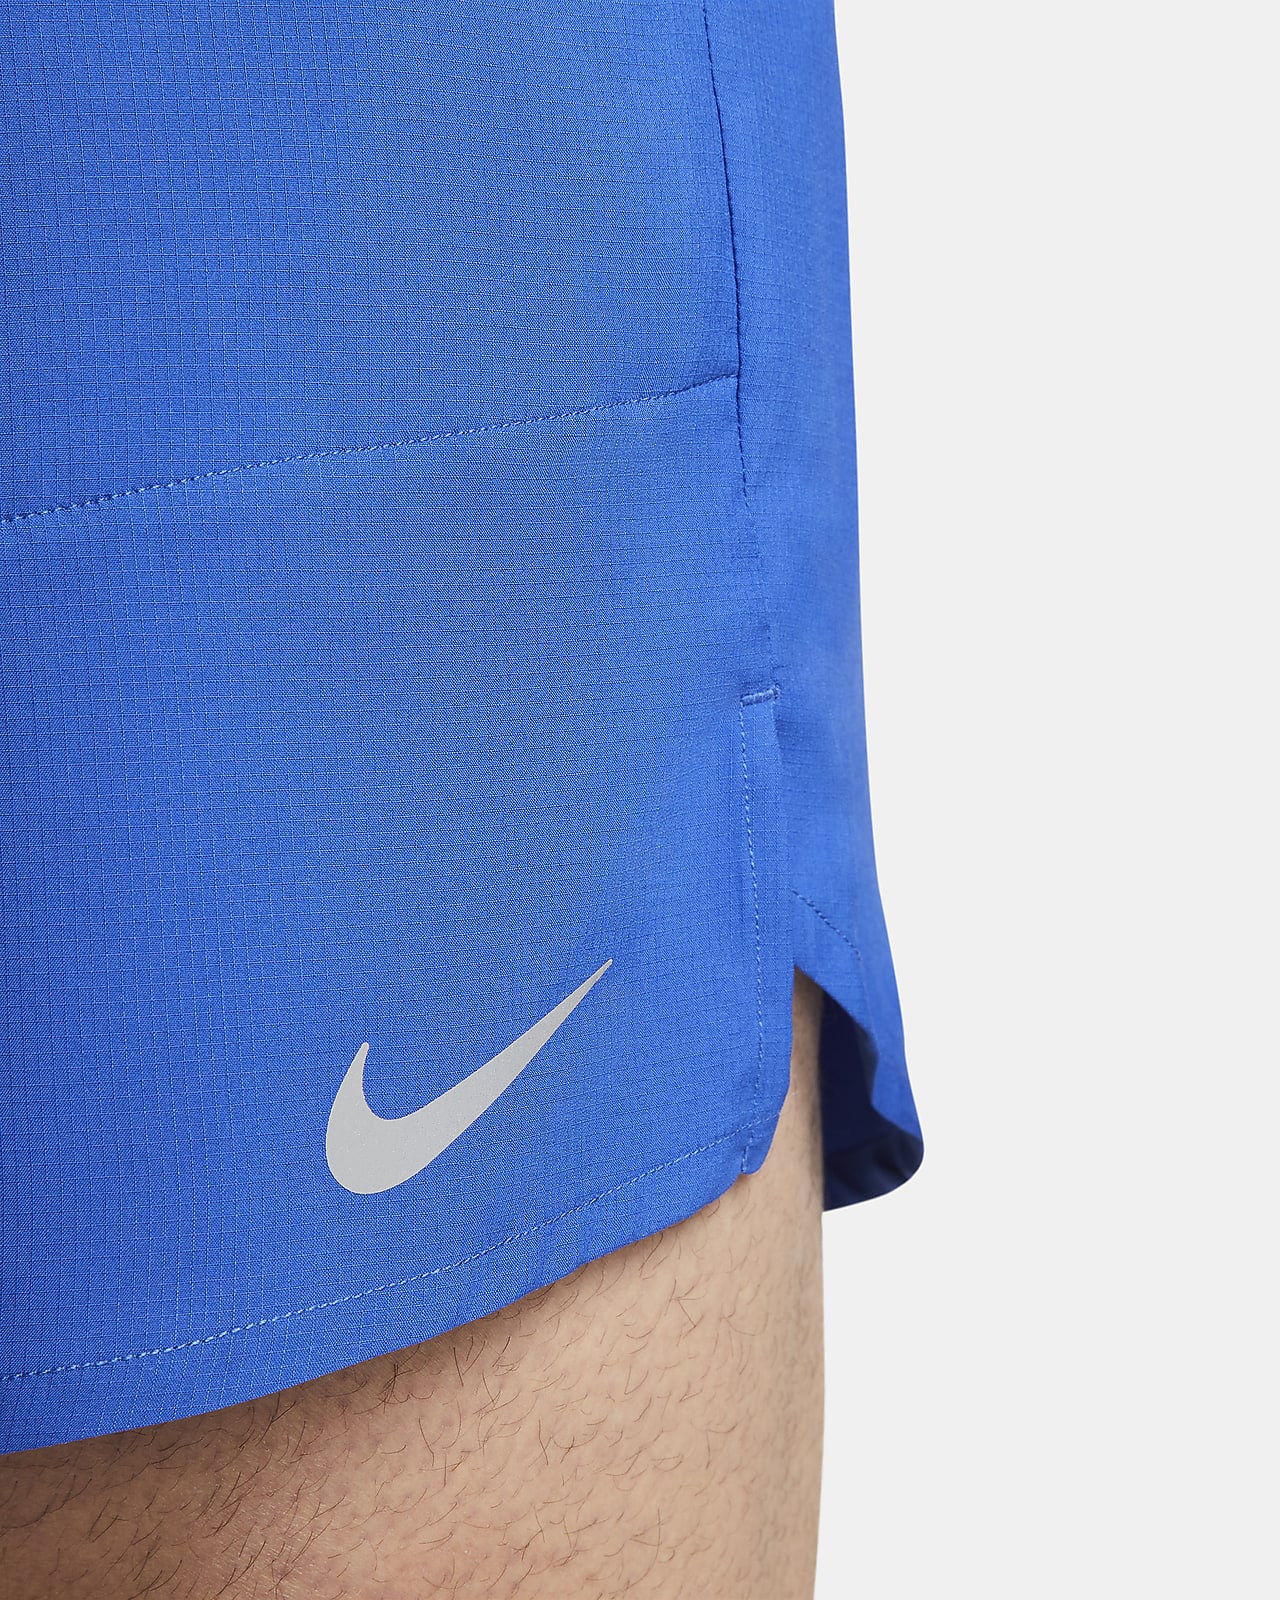 Men's Nike Running Shorts Power Compression Blue 835956-419 03